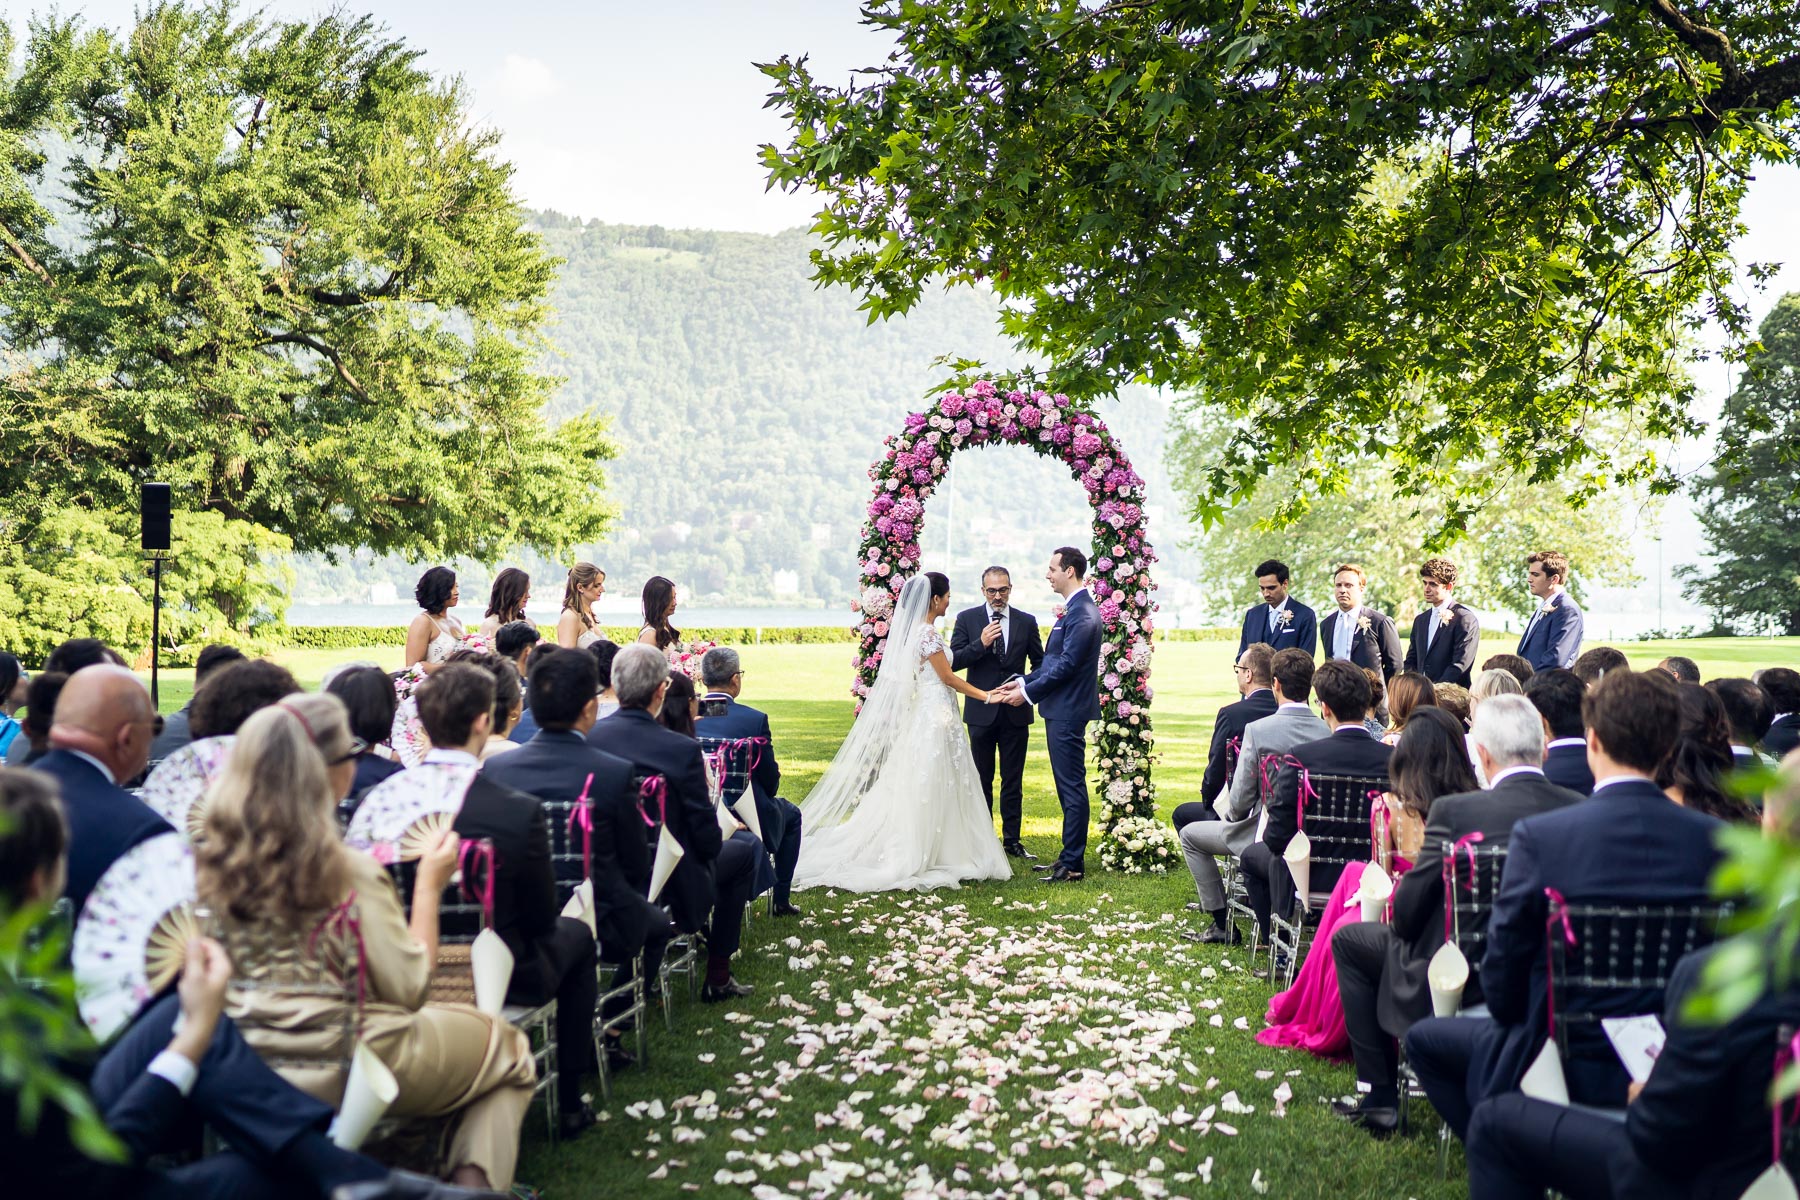 wedding locations,wedding locations italy,best wedding locations in italy,best Wedding Locations